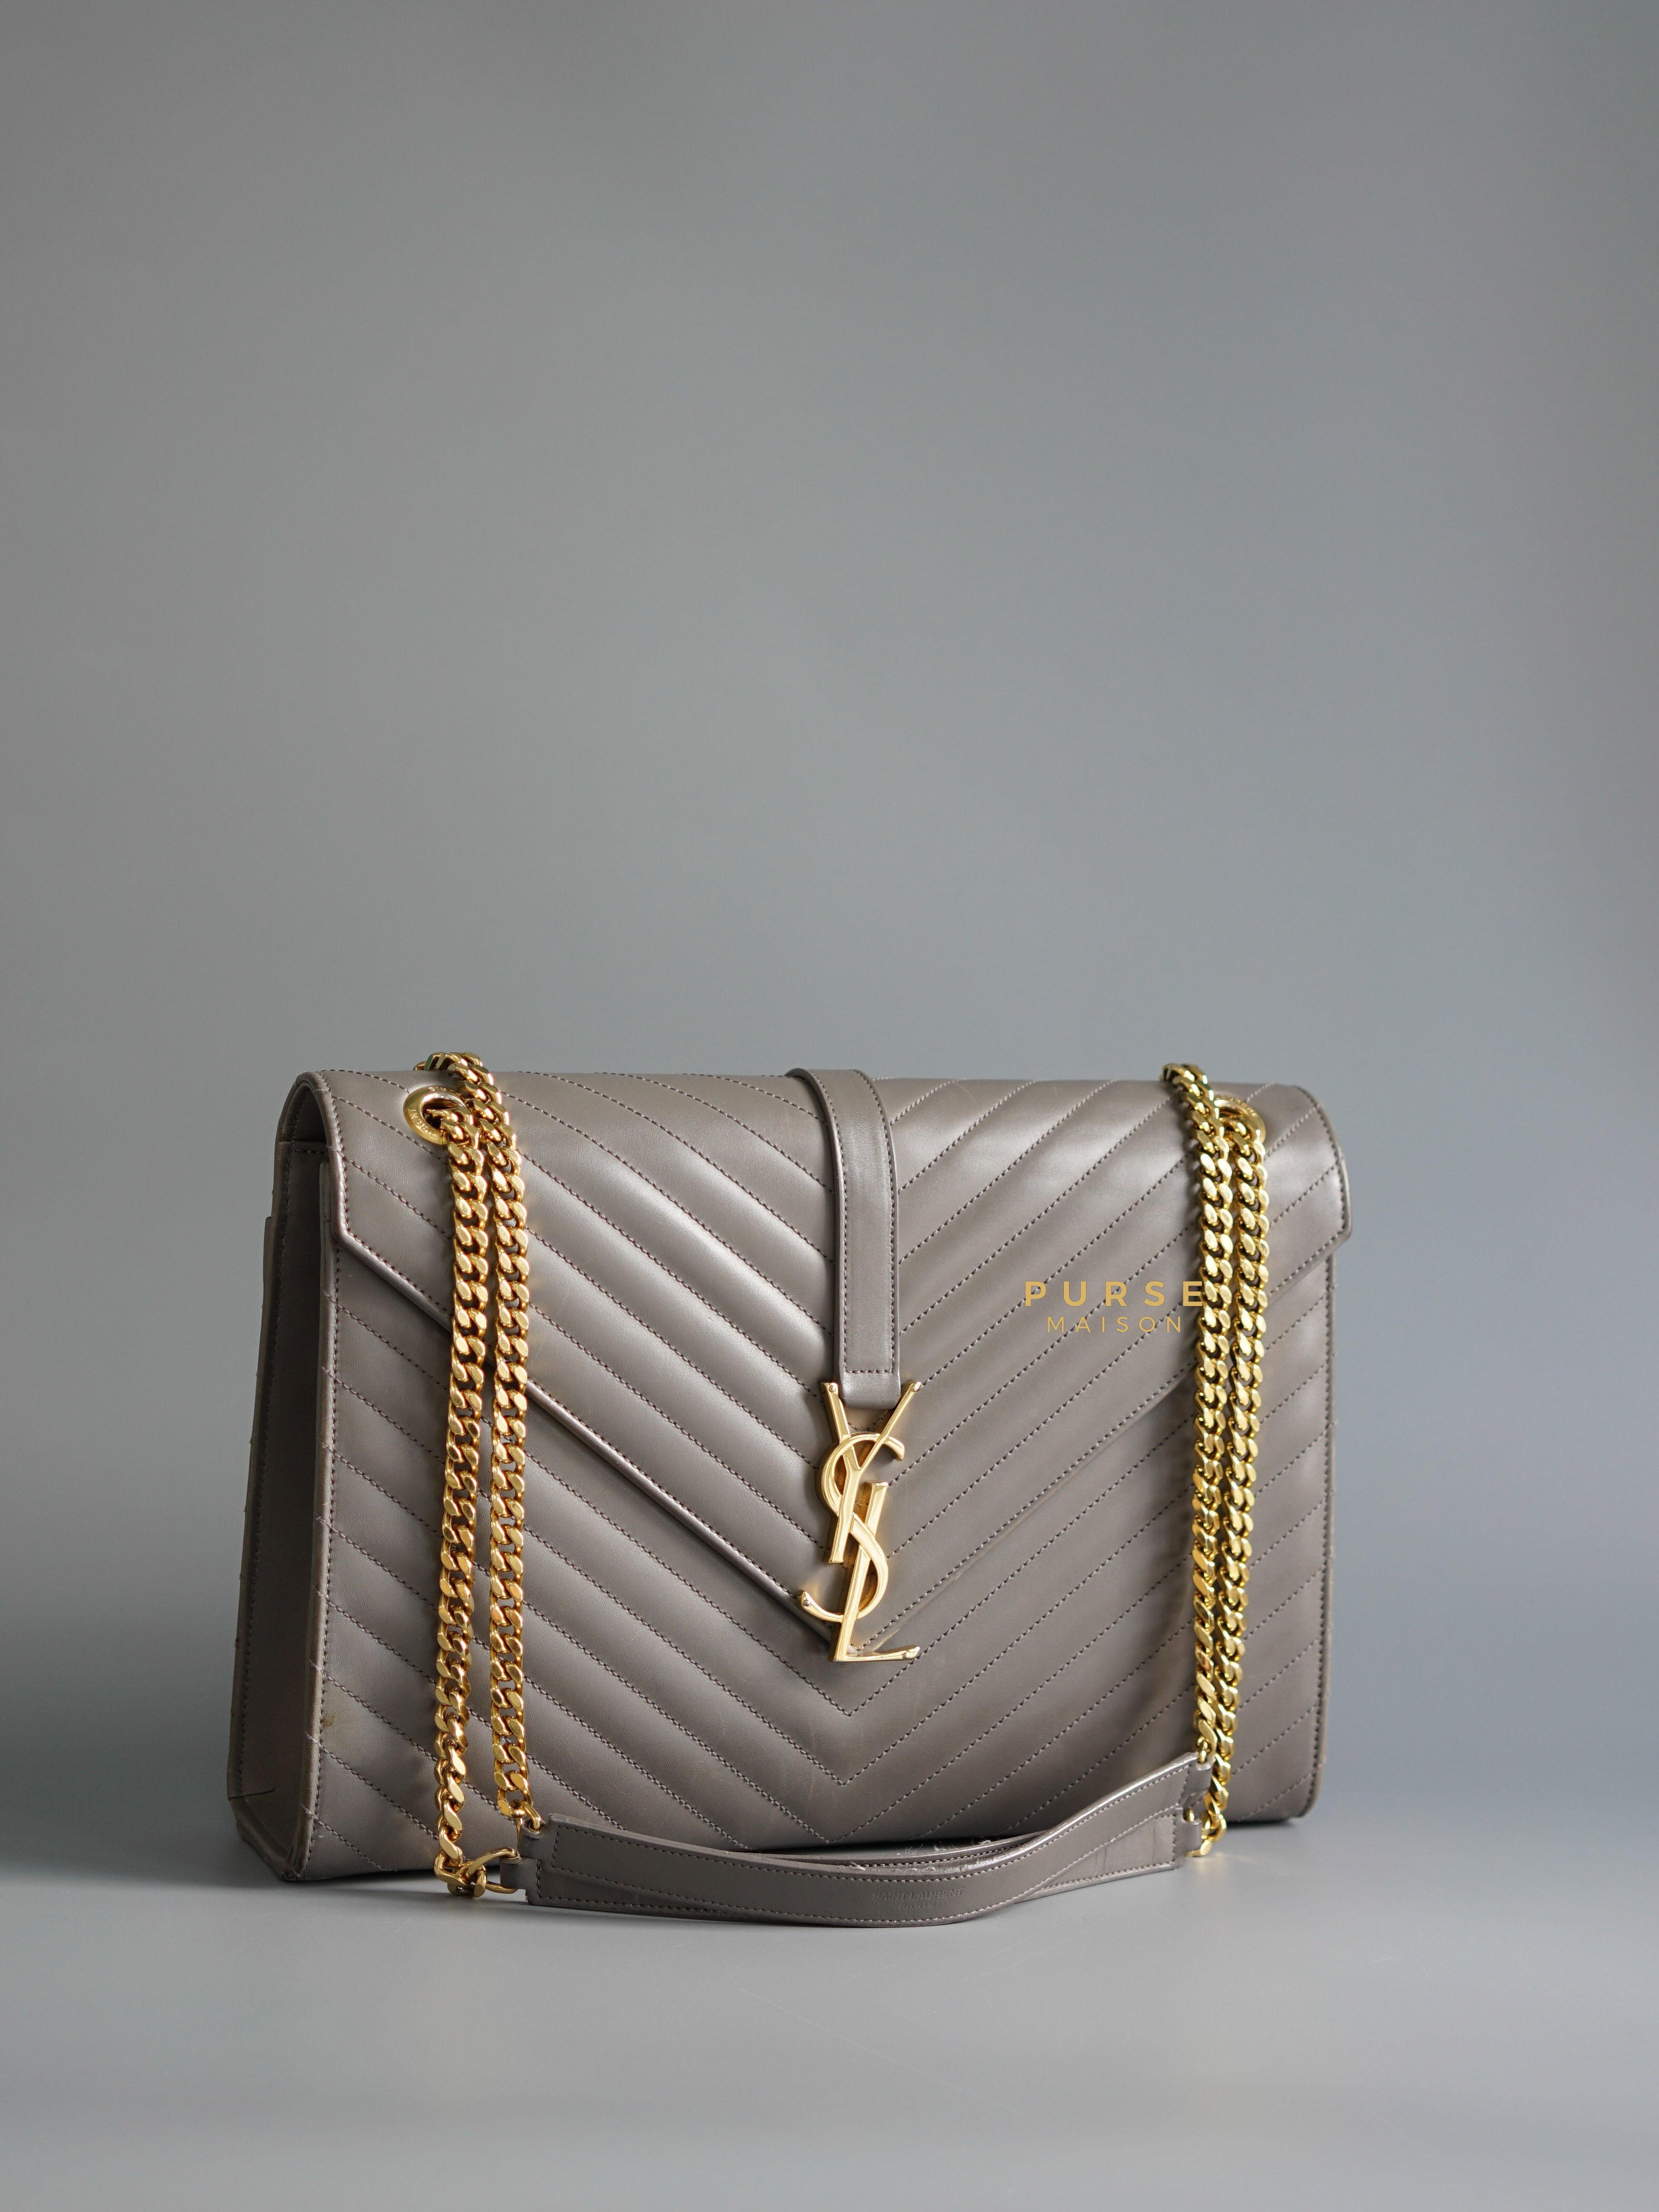 Yves Saint Laurent Handbags for sale in Boise, Idaho | Facebook Marketplace  | Facebook